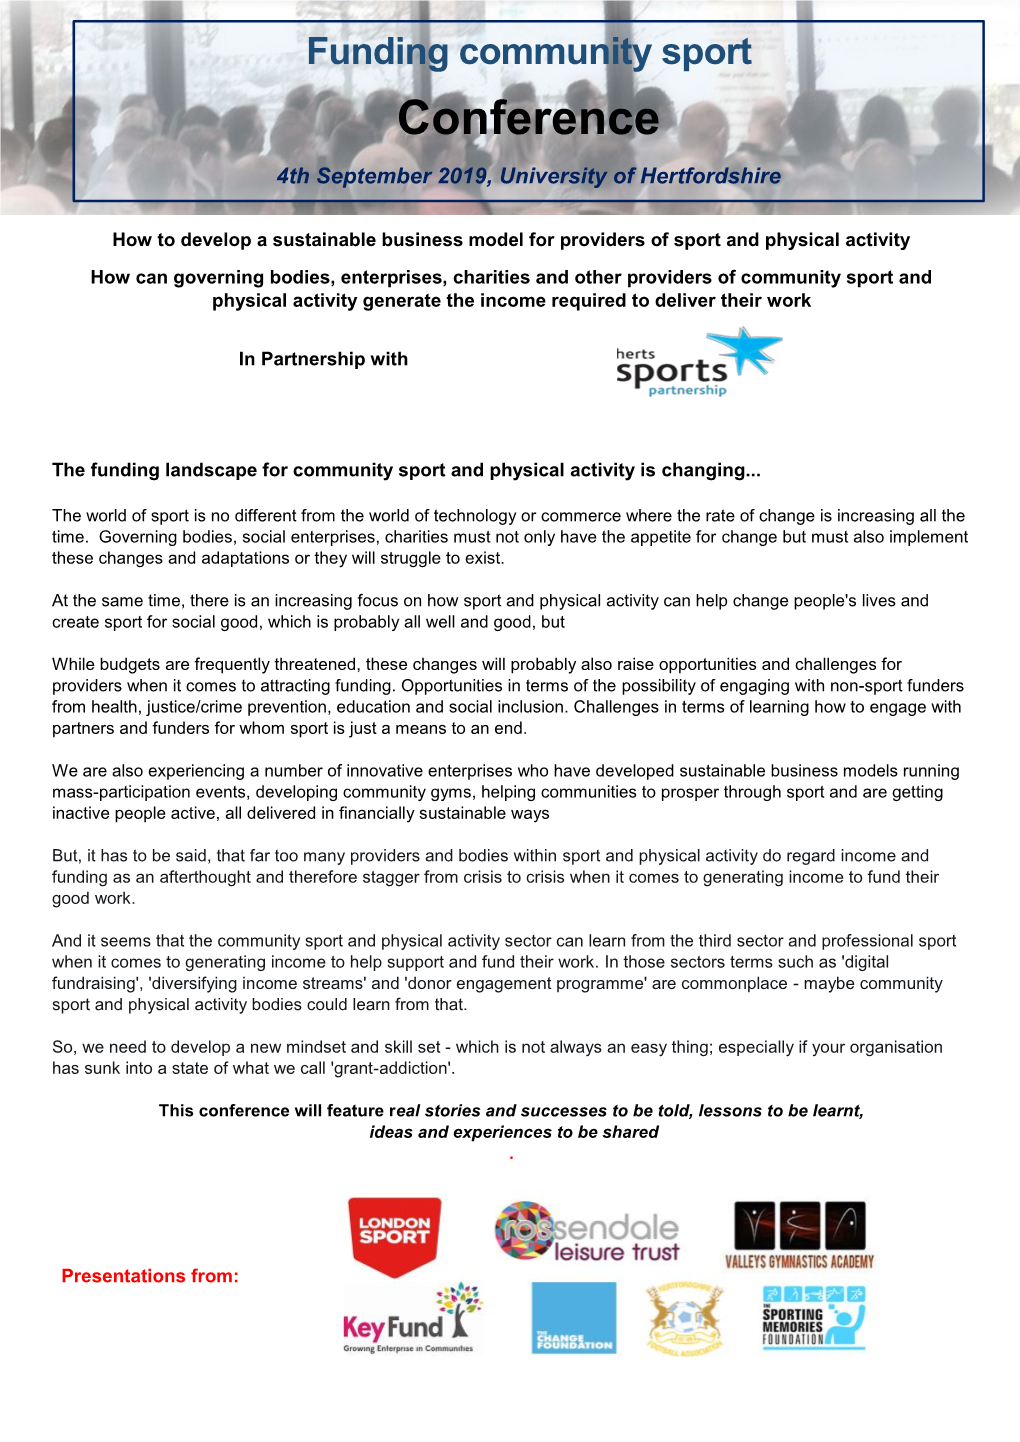 Funding Community Sport Conference 4Th September 2019, University of Hertfordshire